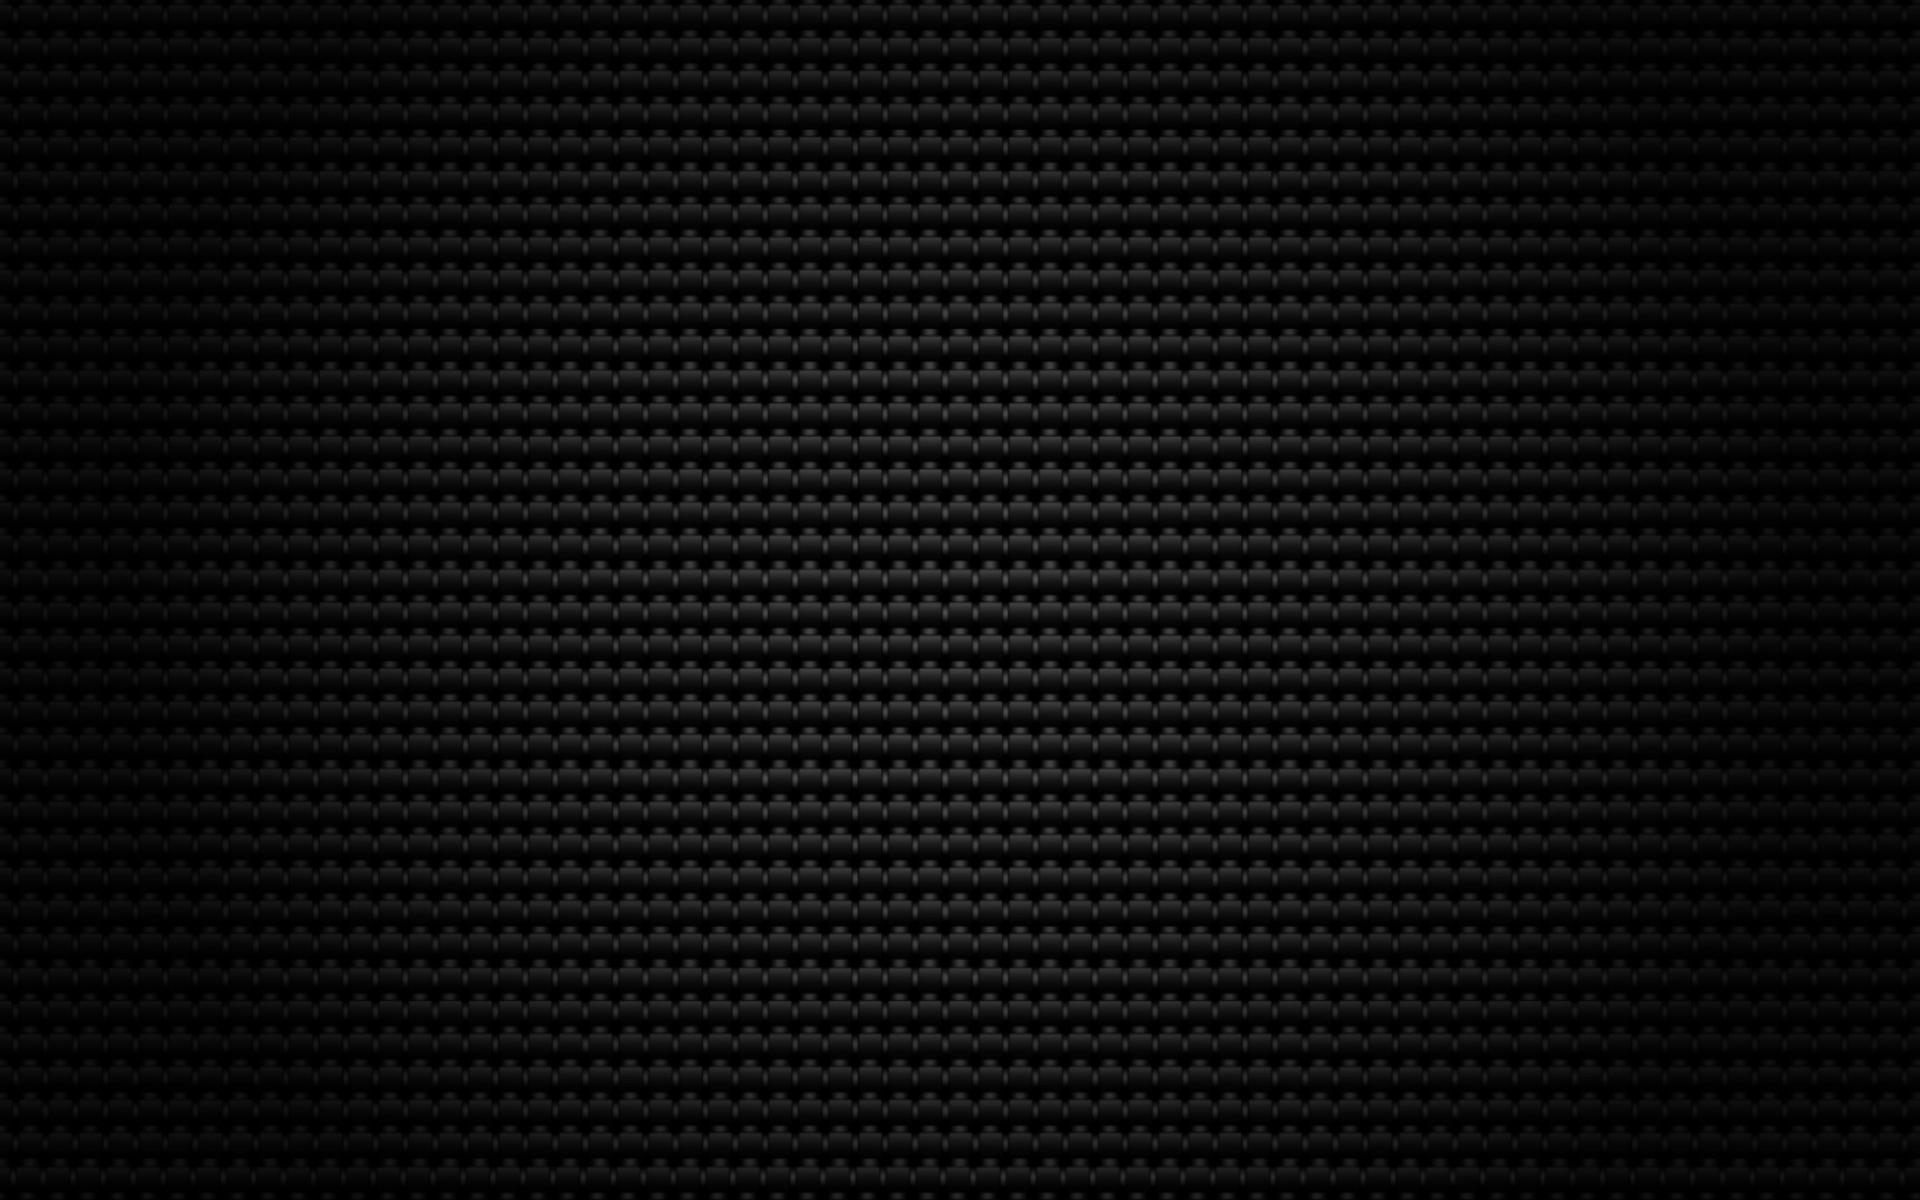 Abstract Background Black Carbon Fiber Fibers Wallpaper